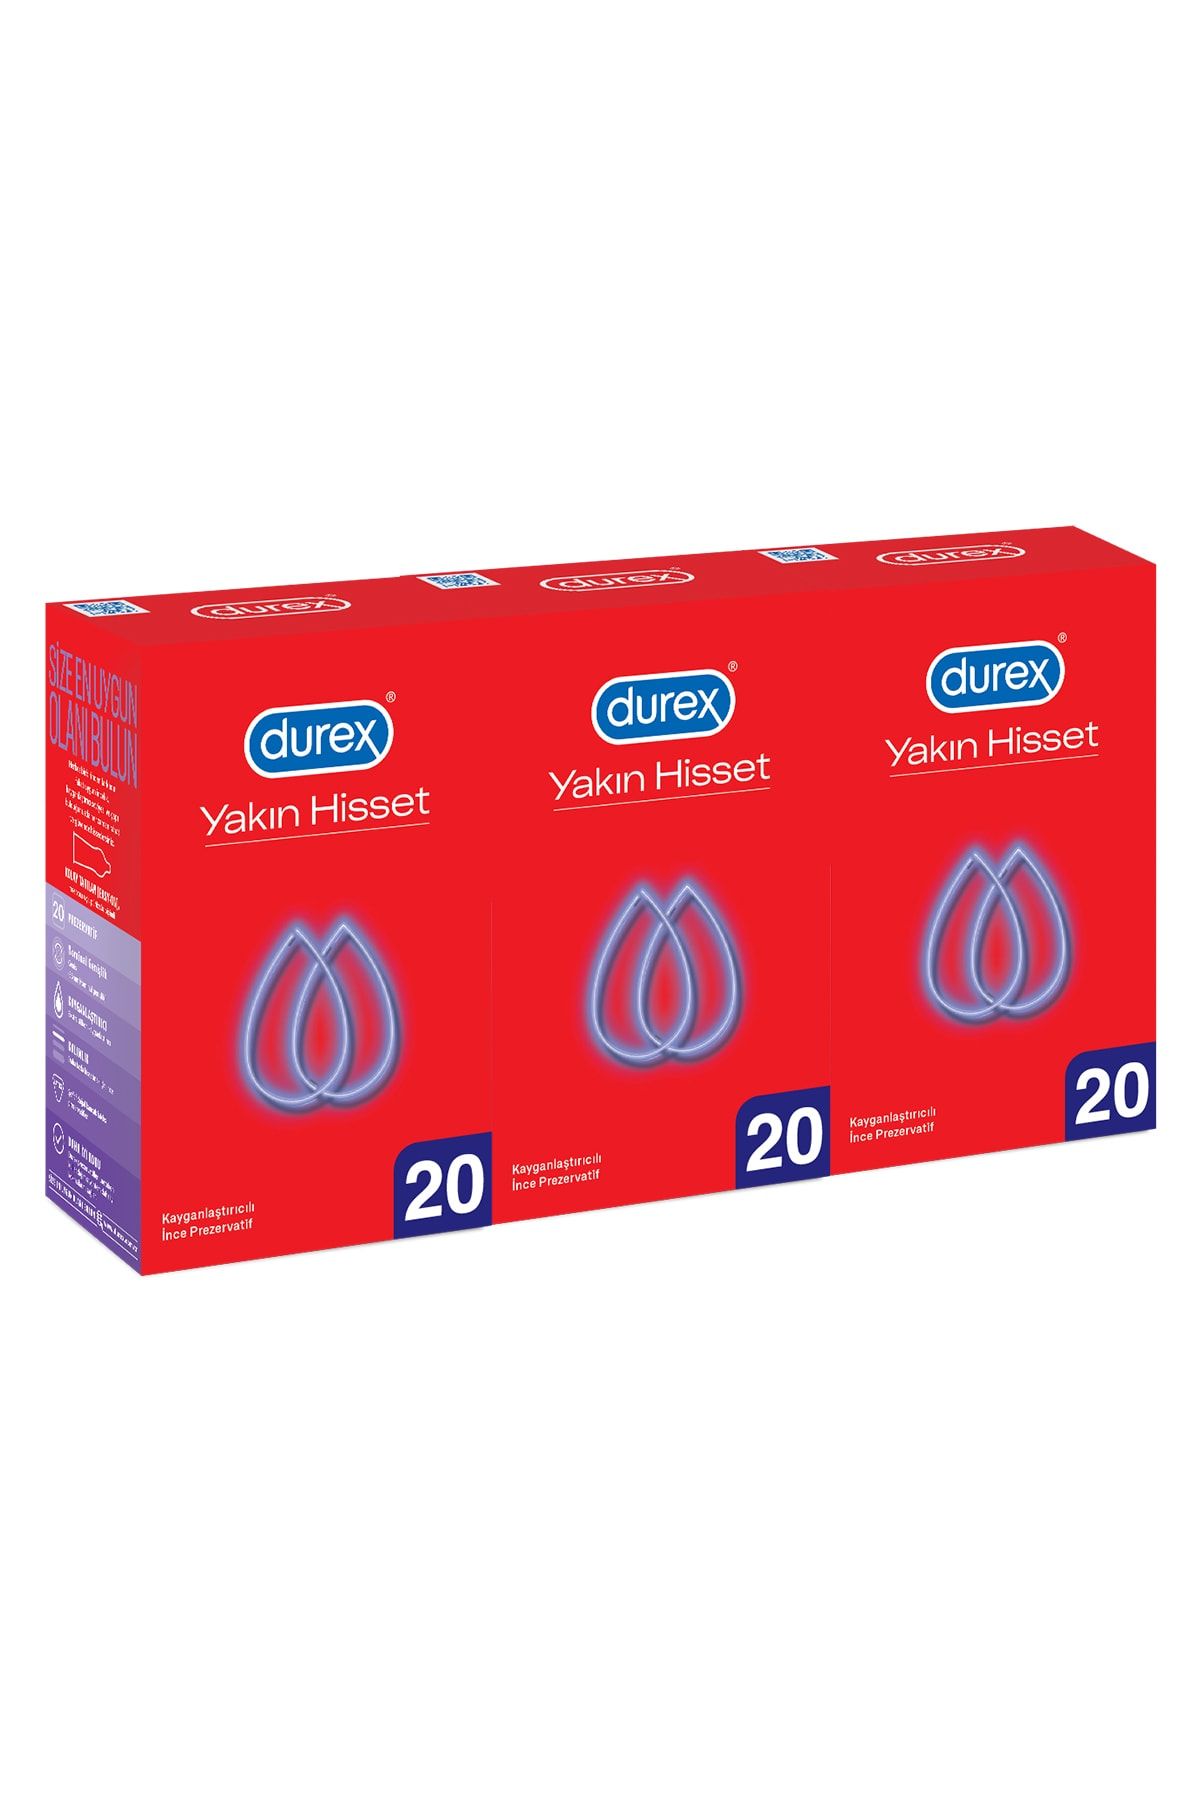 Durex Yakın Hisset Kondom 20 Li X 3 Adet (60 Adet).